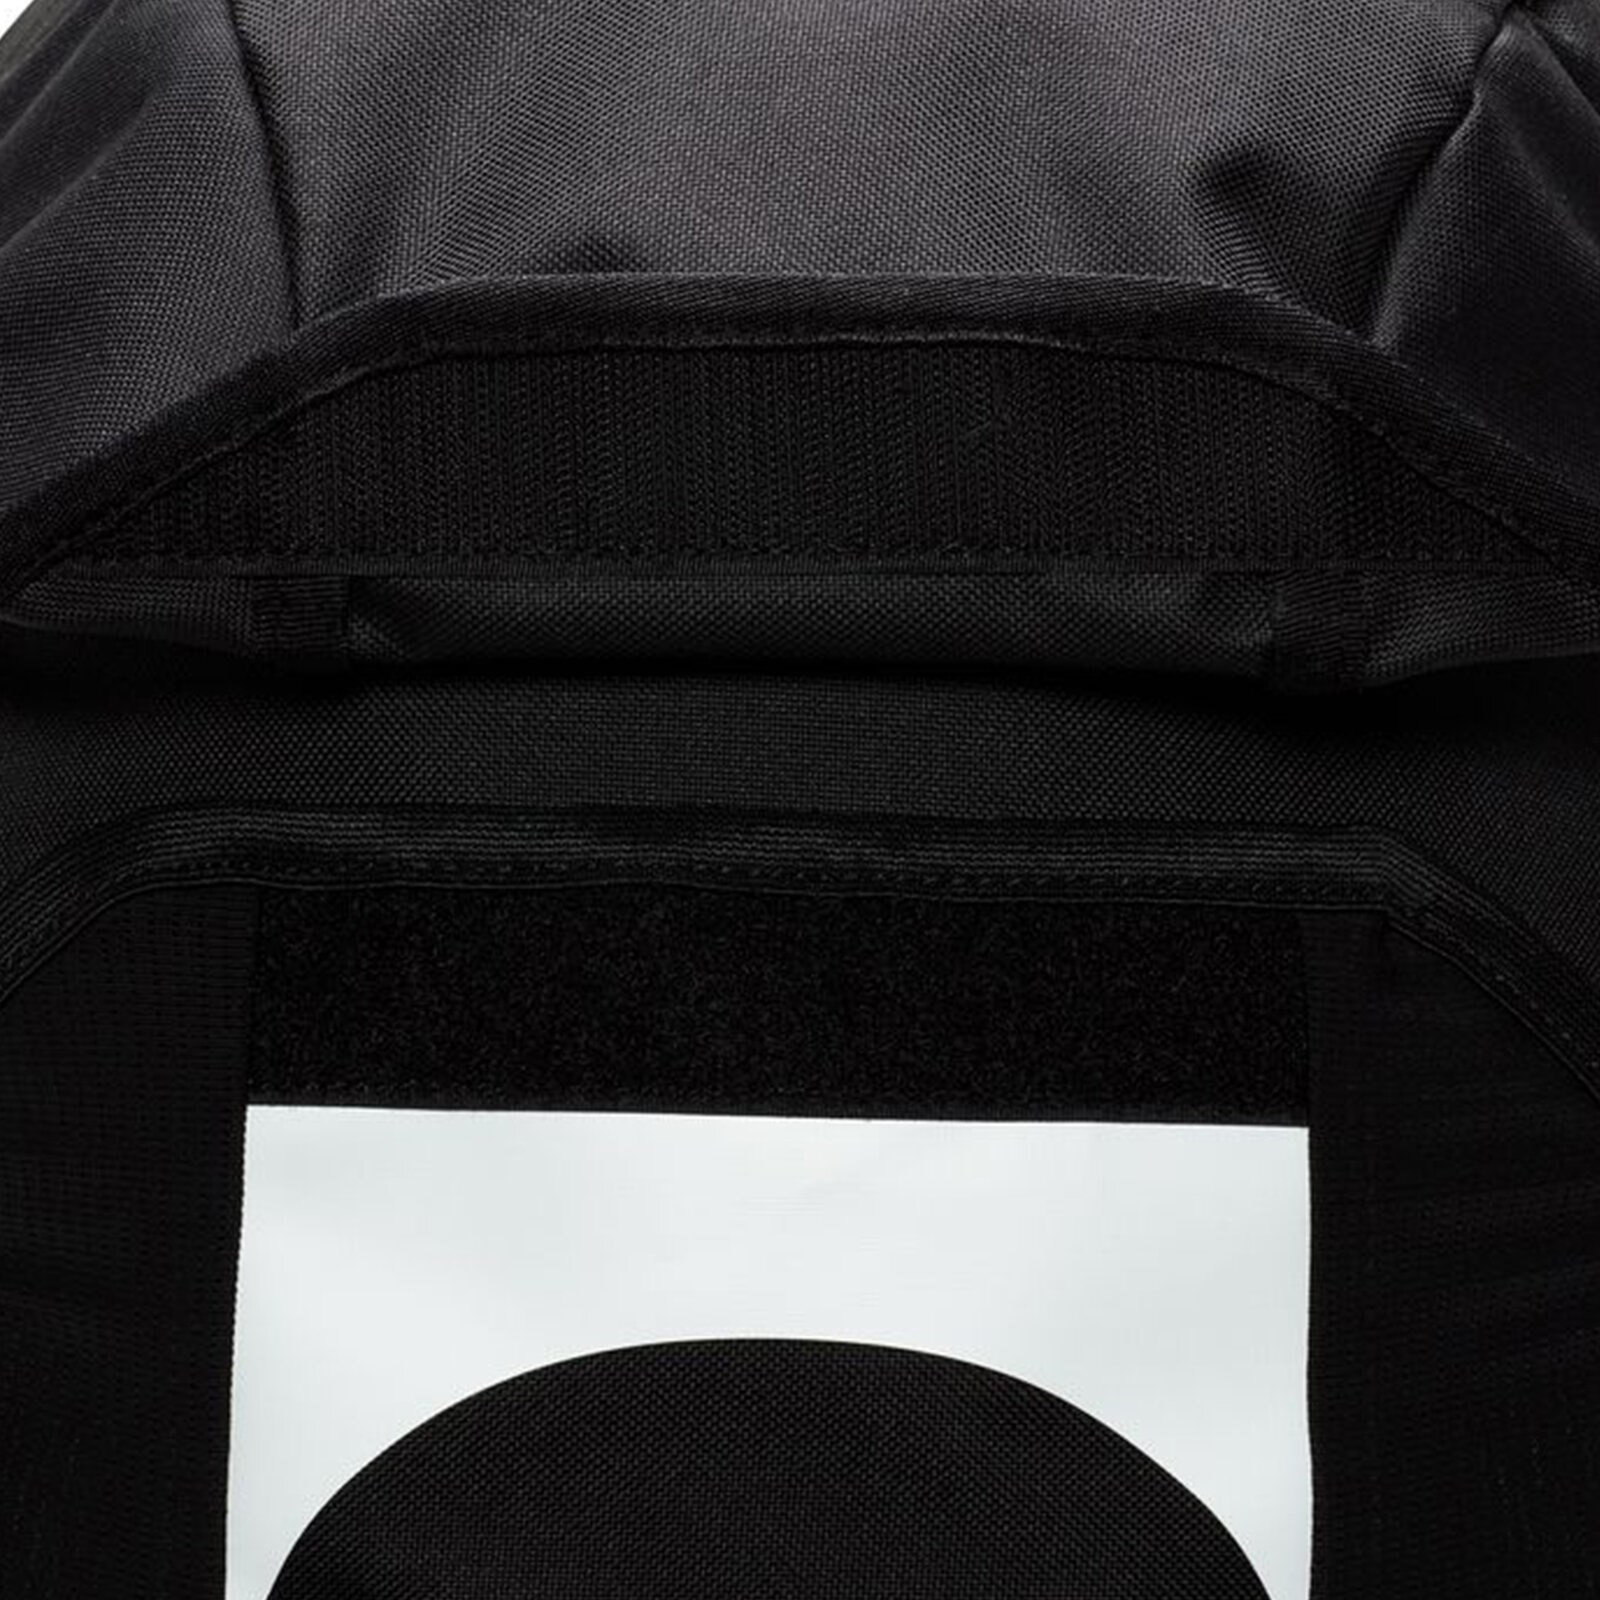 Nike Academy Team Backpack 2.3 Erkek Sırt Çantası Siyah